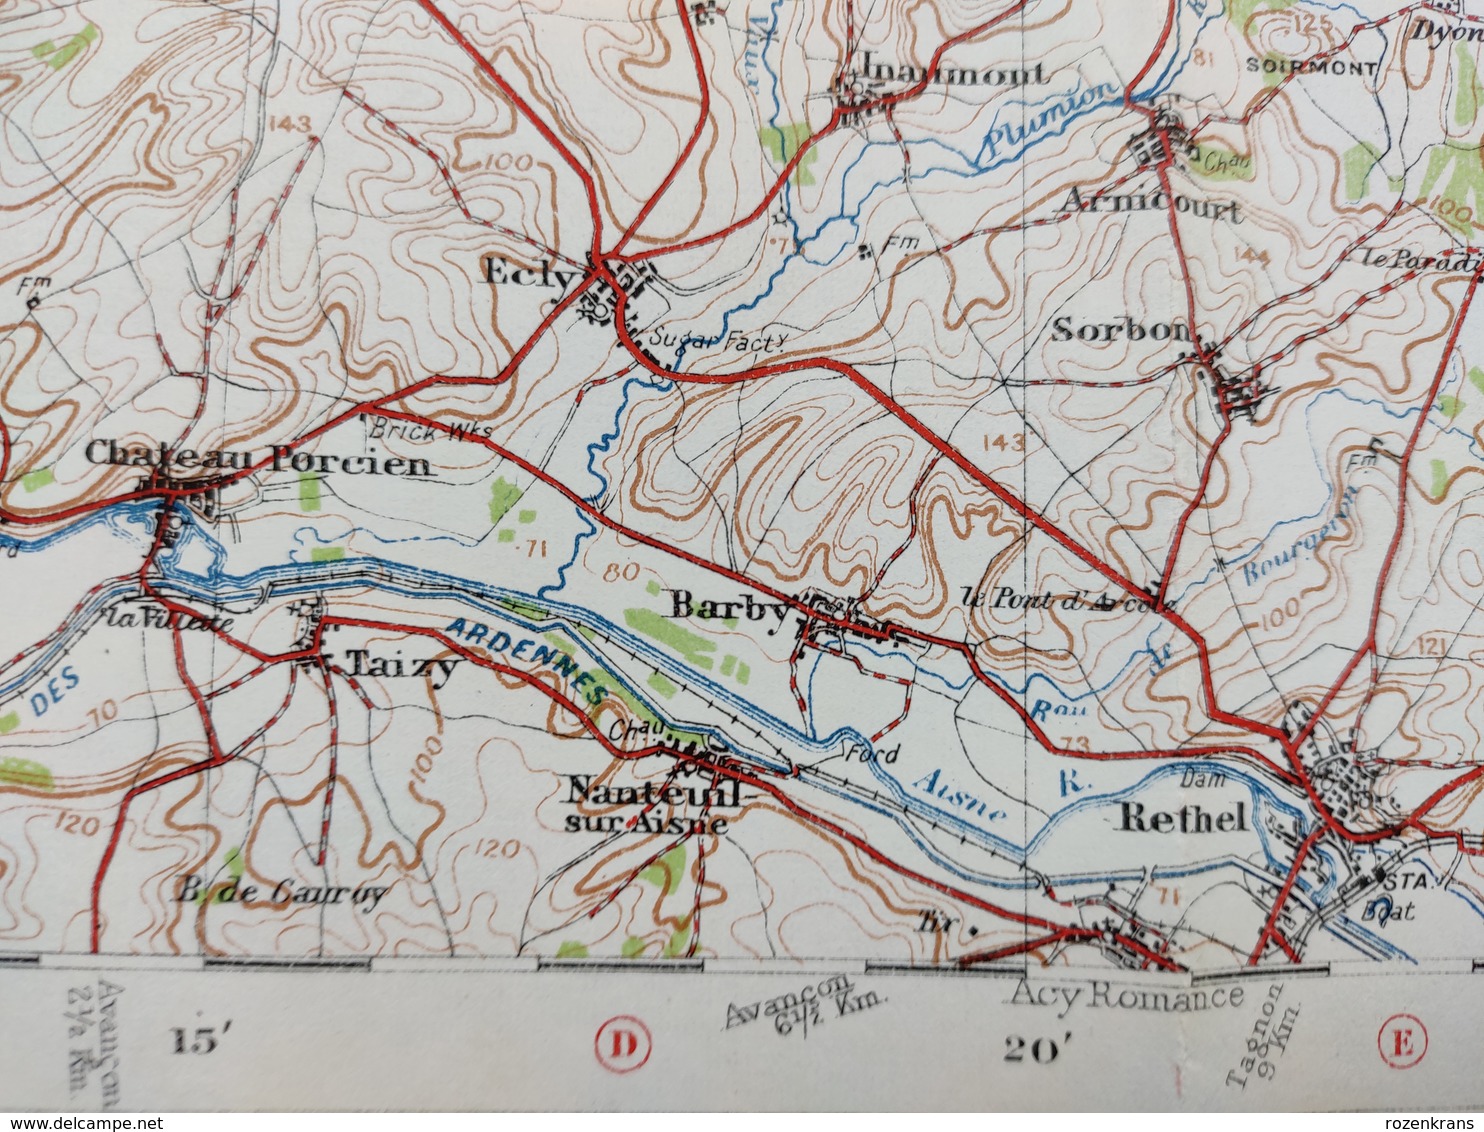 Carte Topographique Militaire UK War Office 1915 World War 1 WW1 Charlesville Mezieres Sedan Rocroi Hirson Sugny Rethel - Carte Topografiche